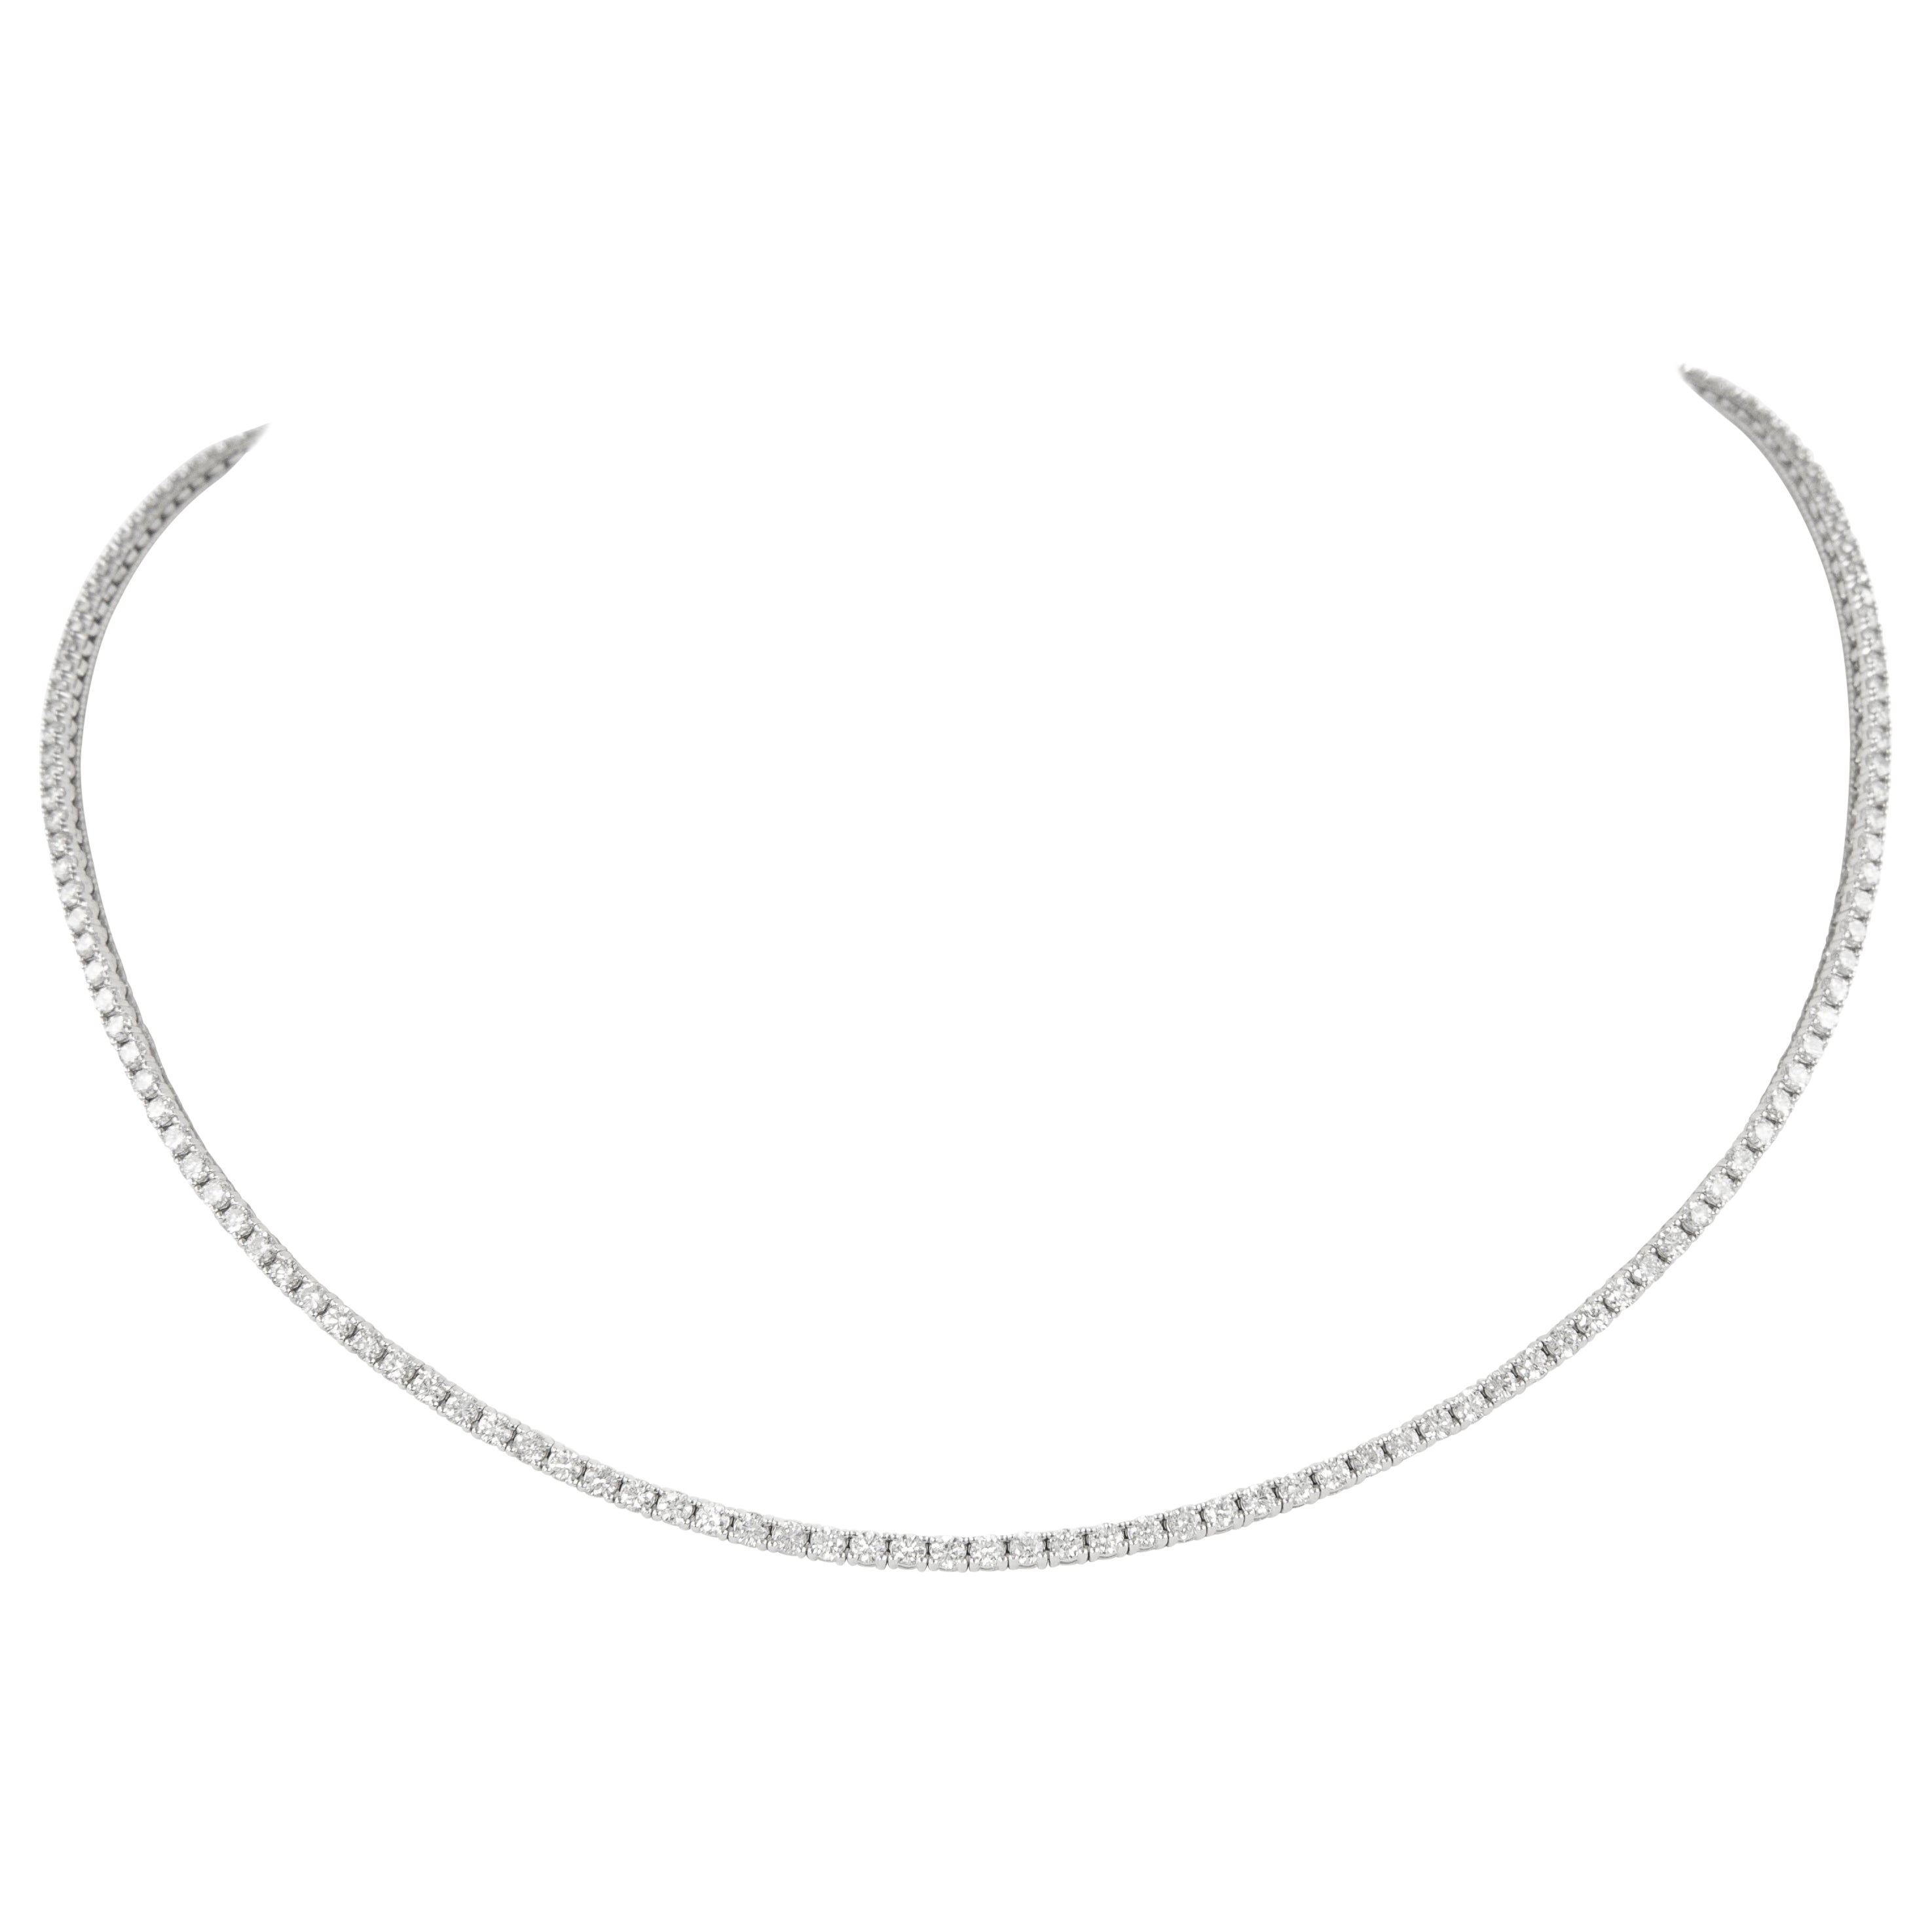 Alexander 6.25 Carat Diamond Tennis Necklace 18 Karat White Gold